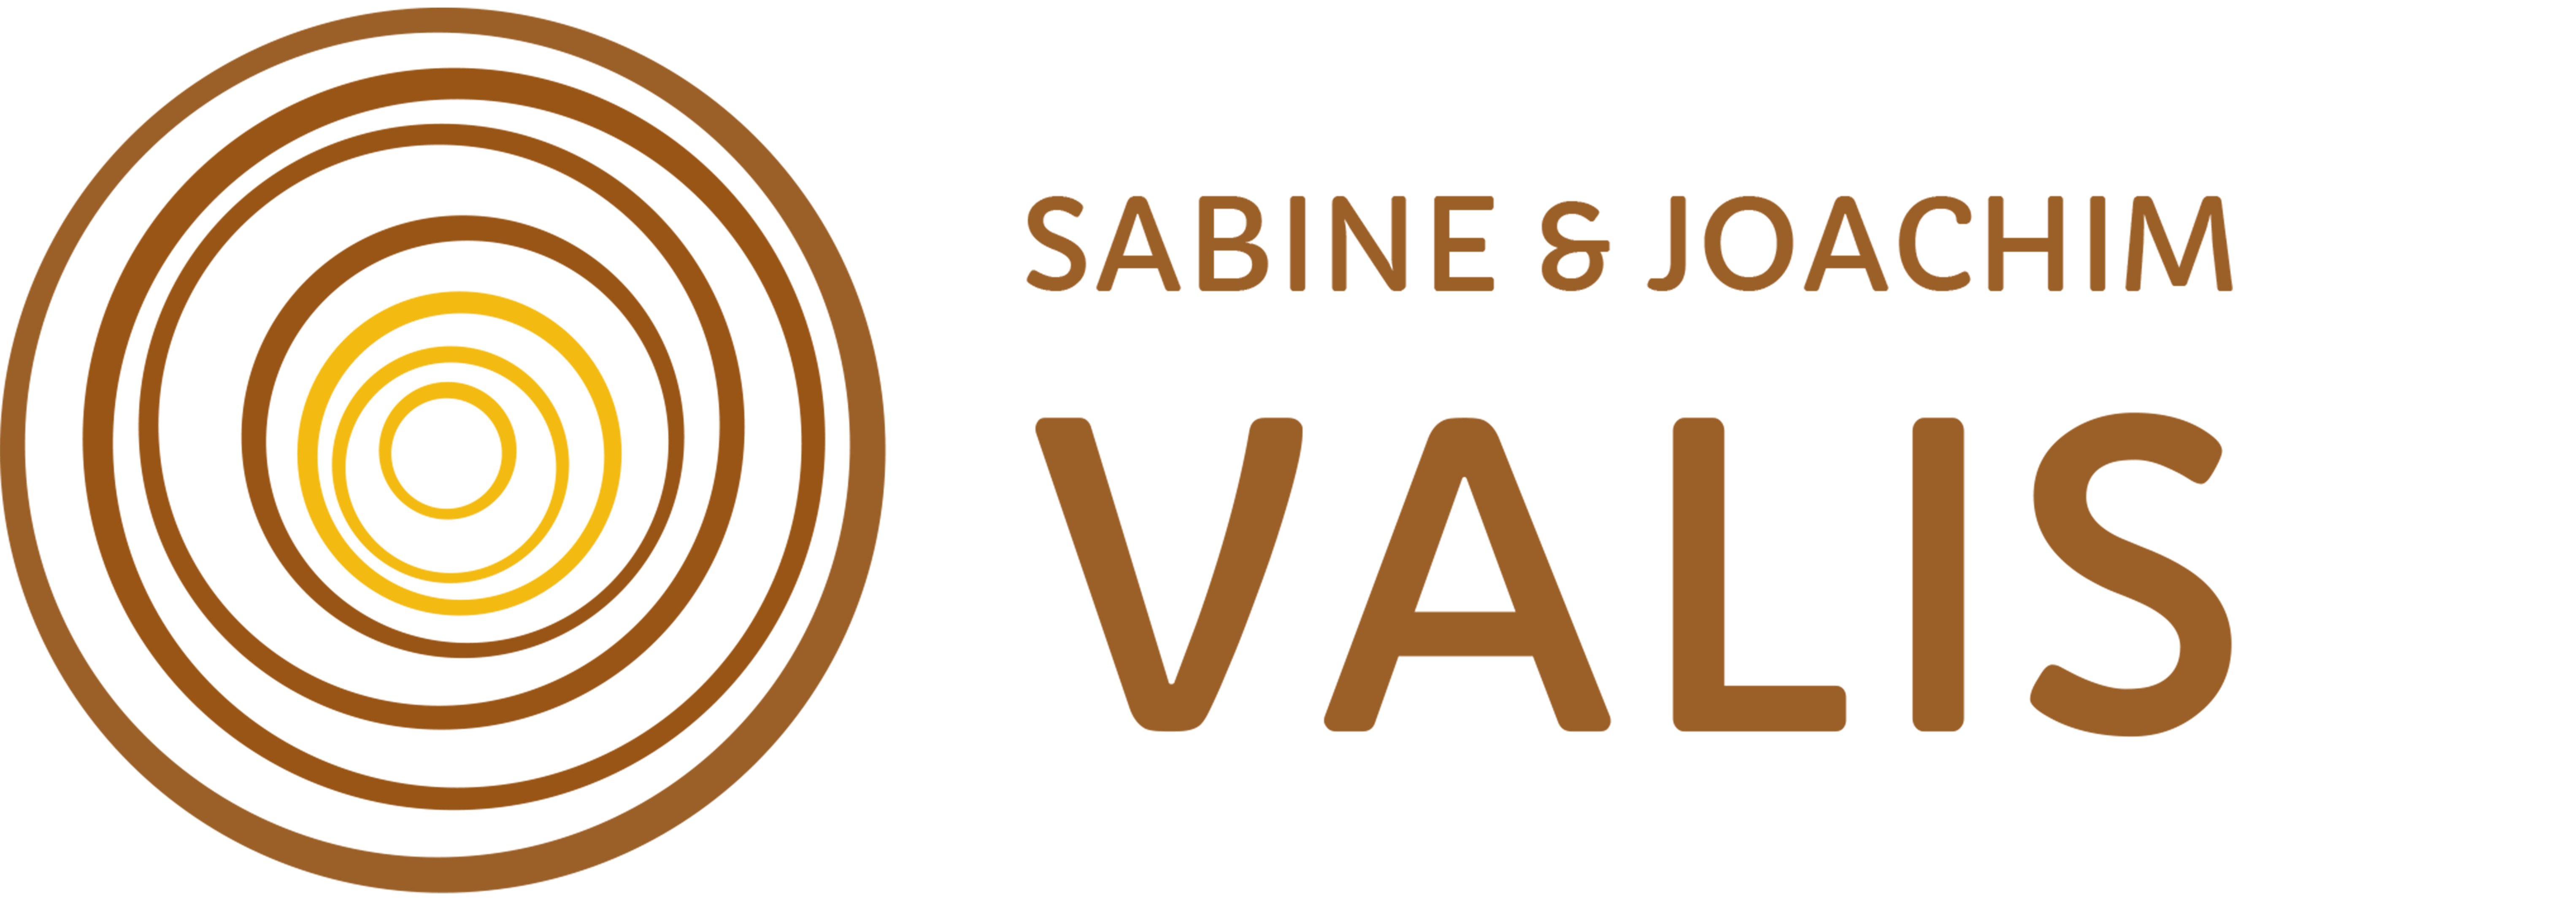 Marchfelder Zwiebel GmbH – Sabine & Joachim Valis